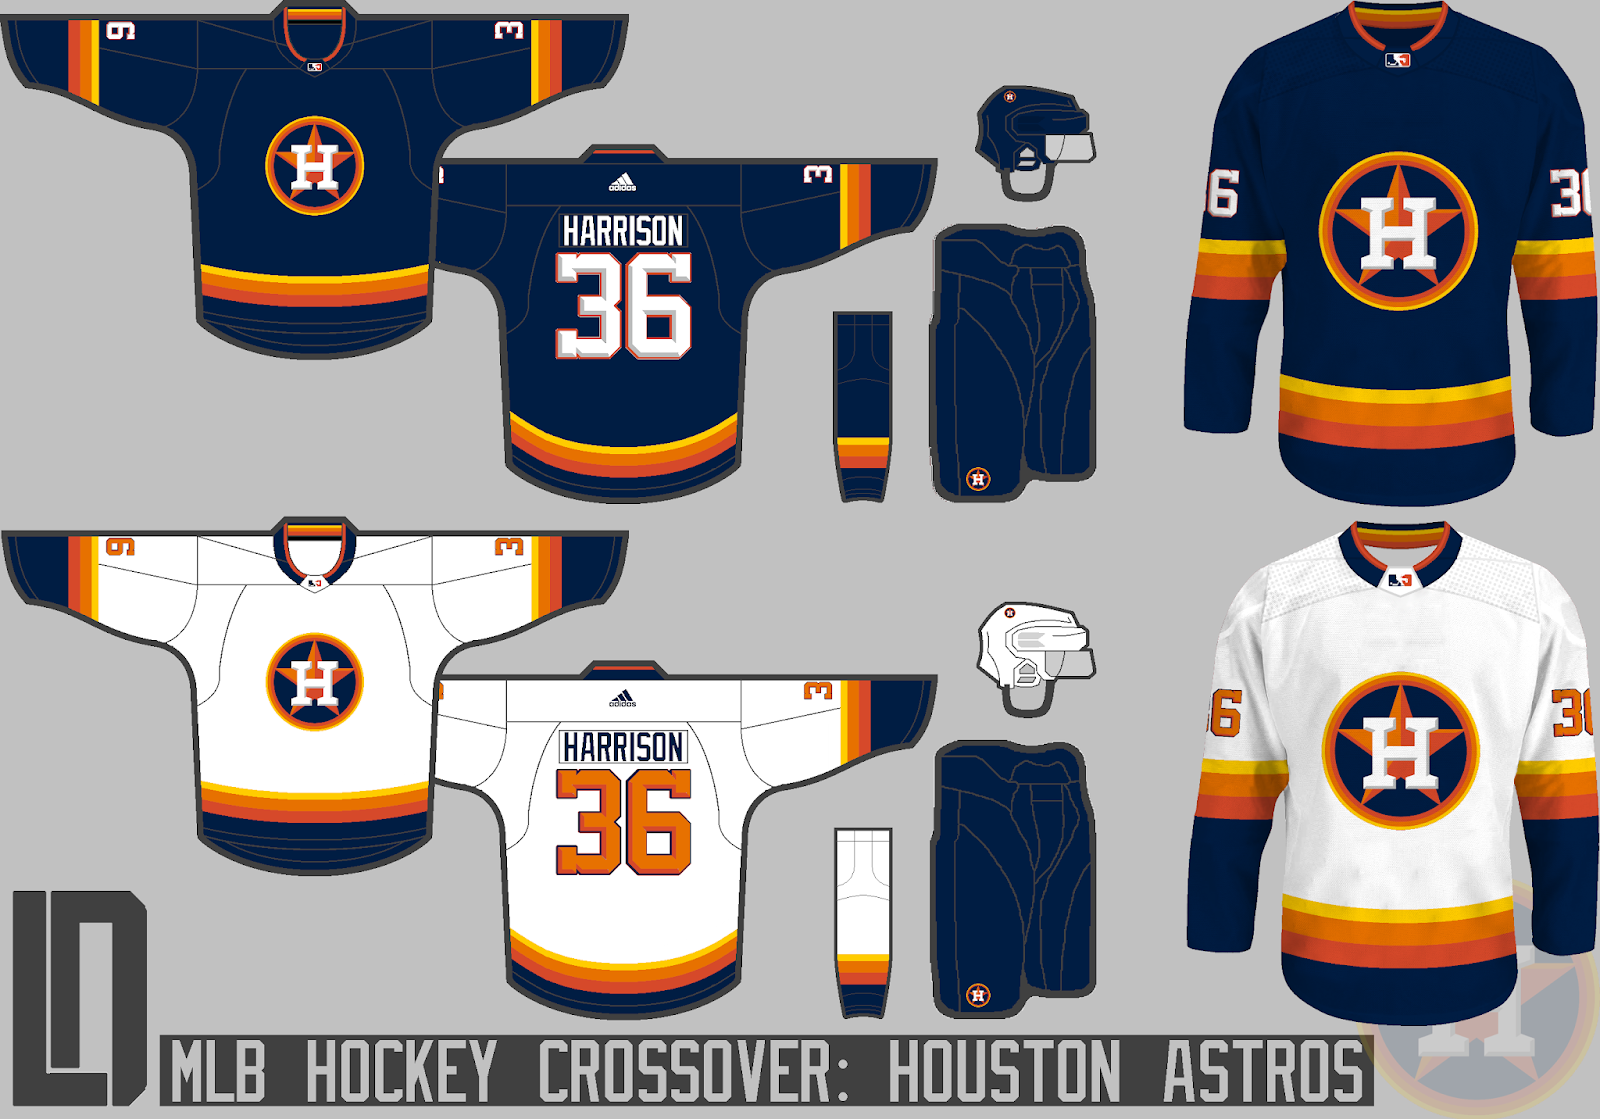 astros hockey jersey